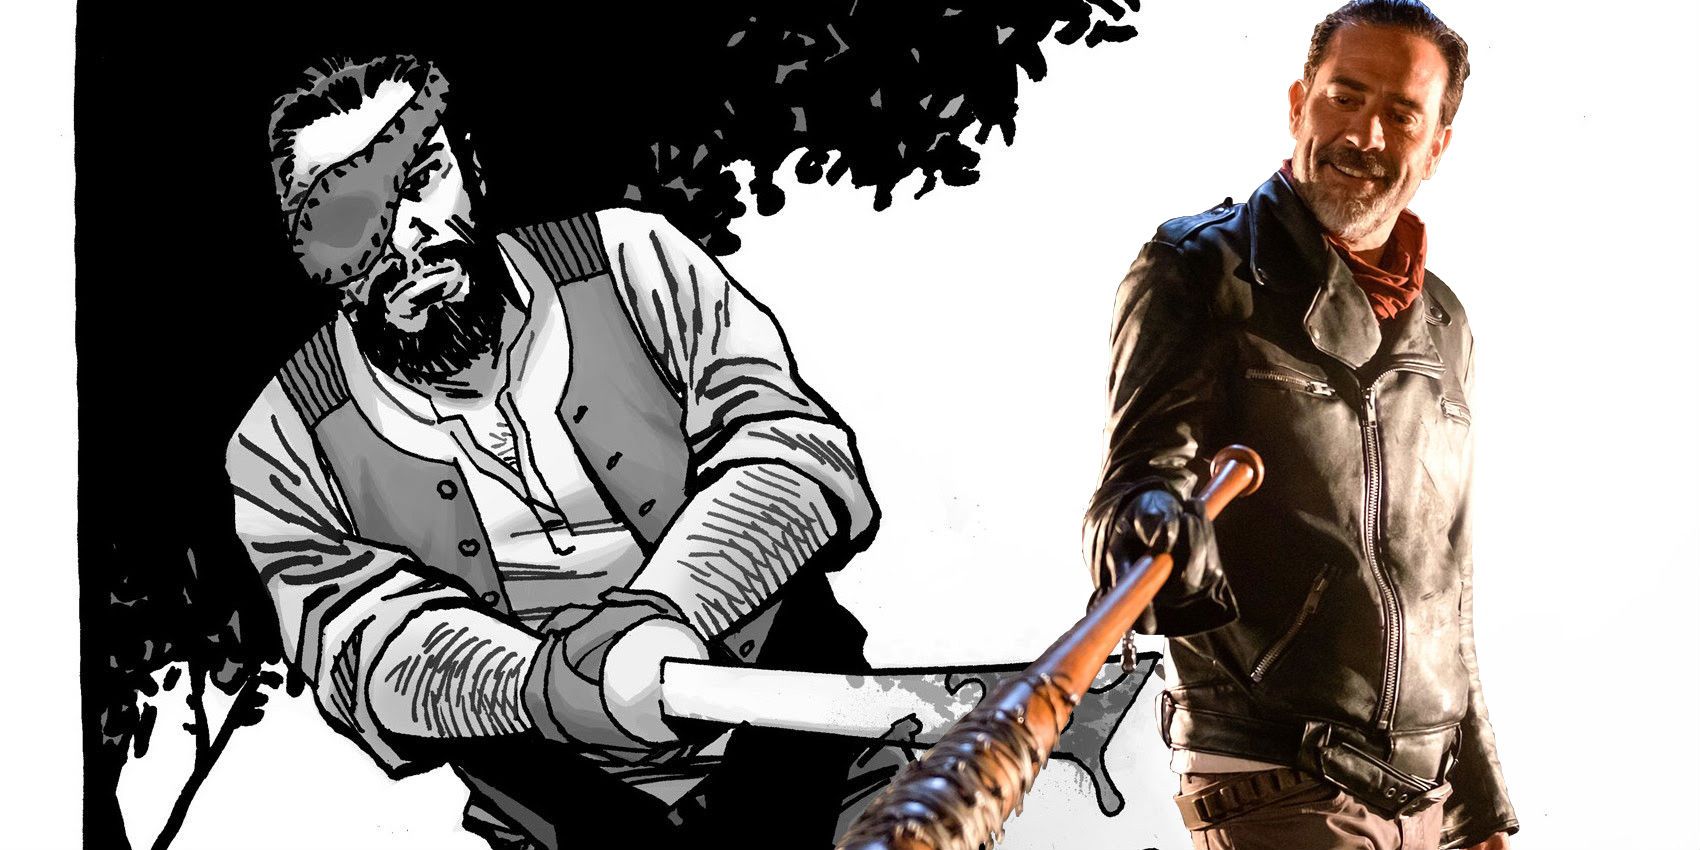 Carl Grimes The Walking Dead comic and Jeffrey Dean Morgan as Negan